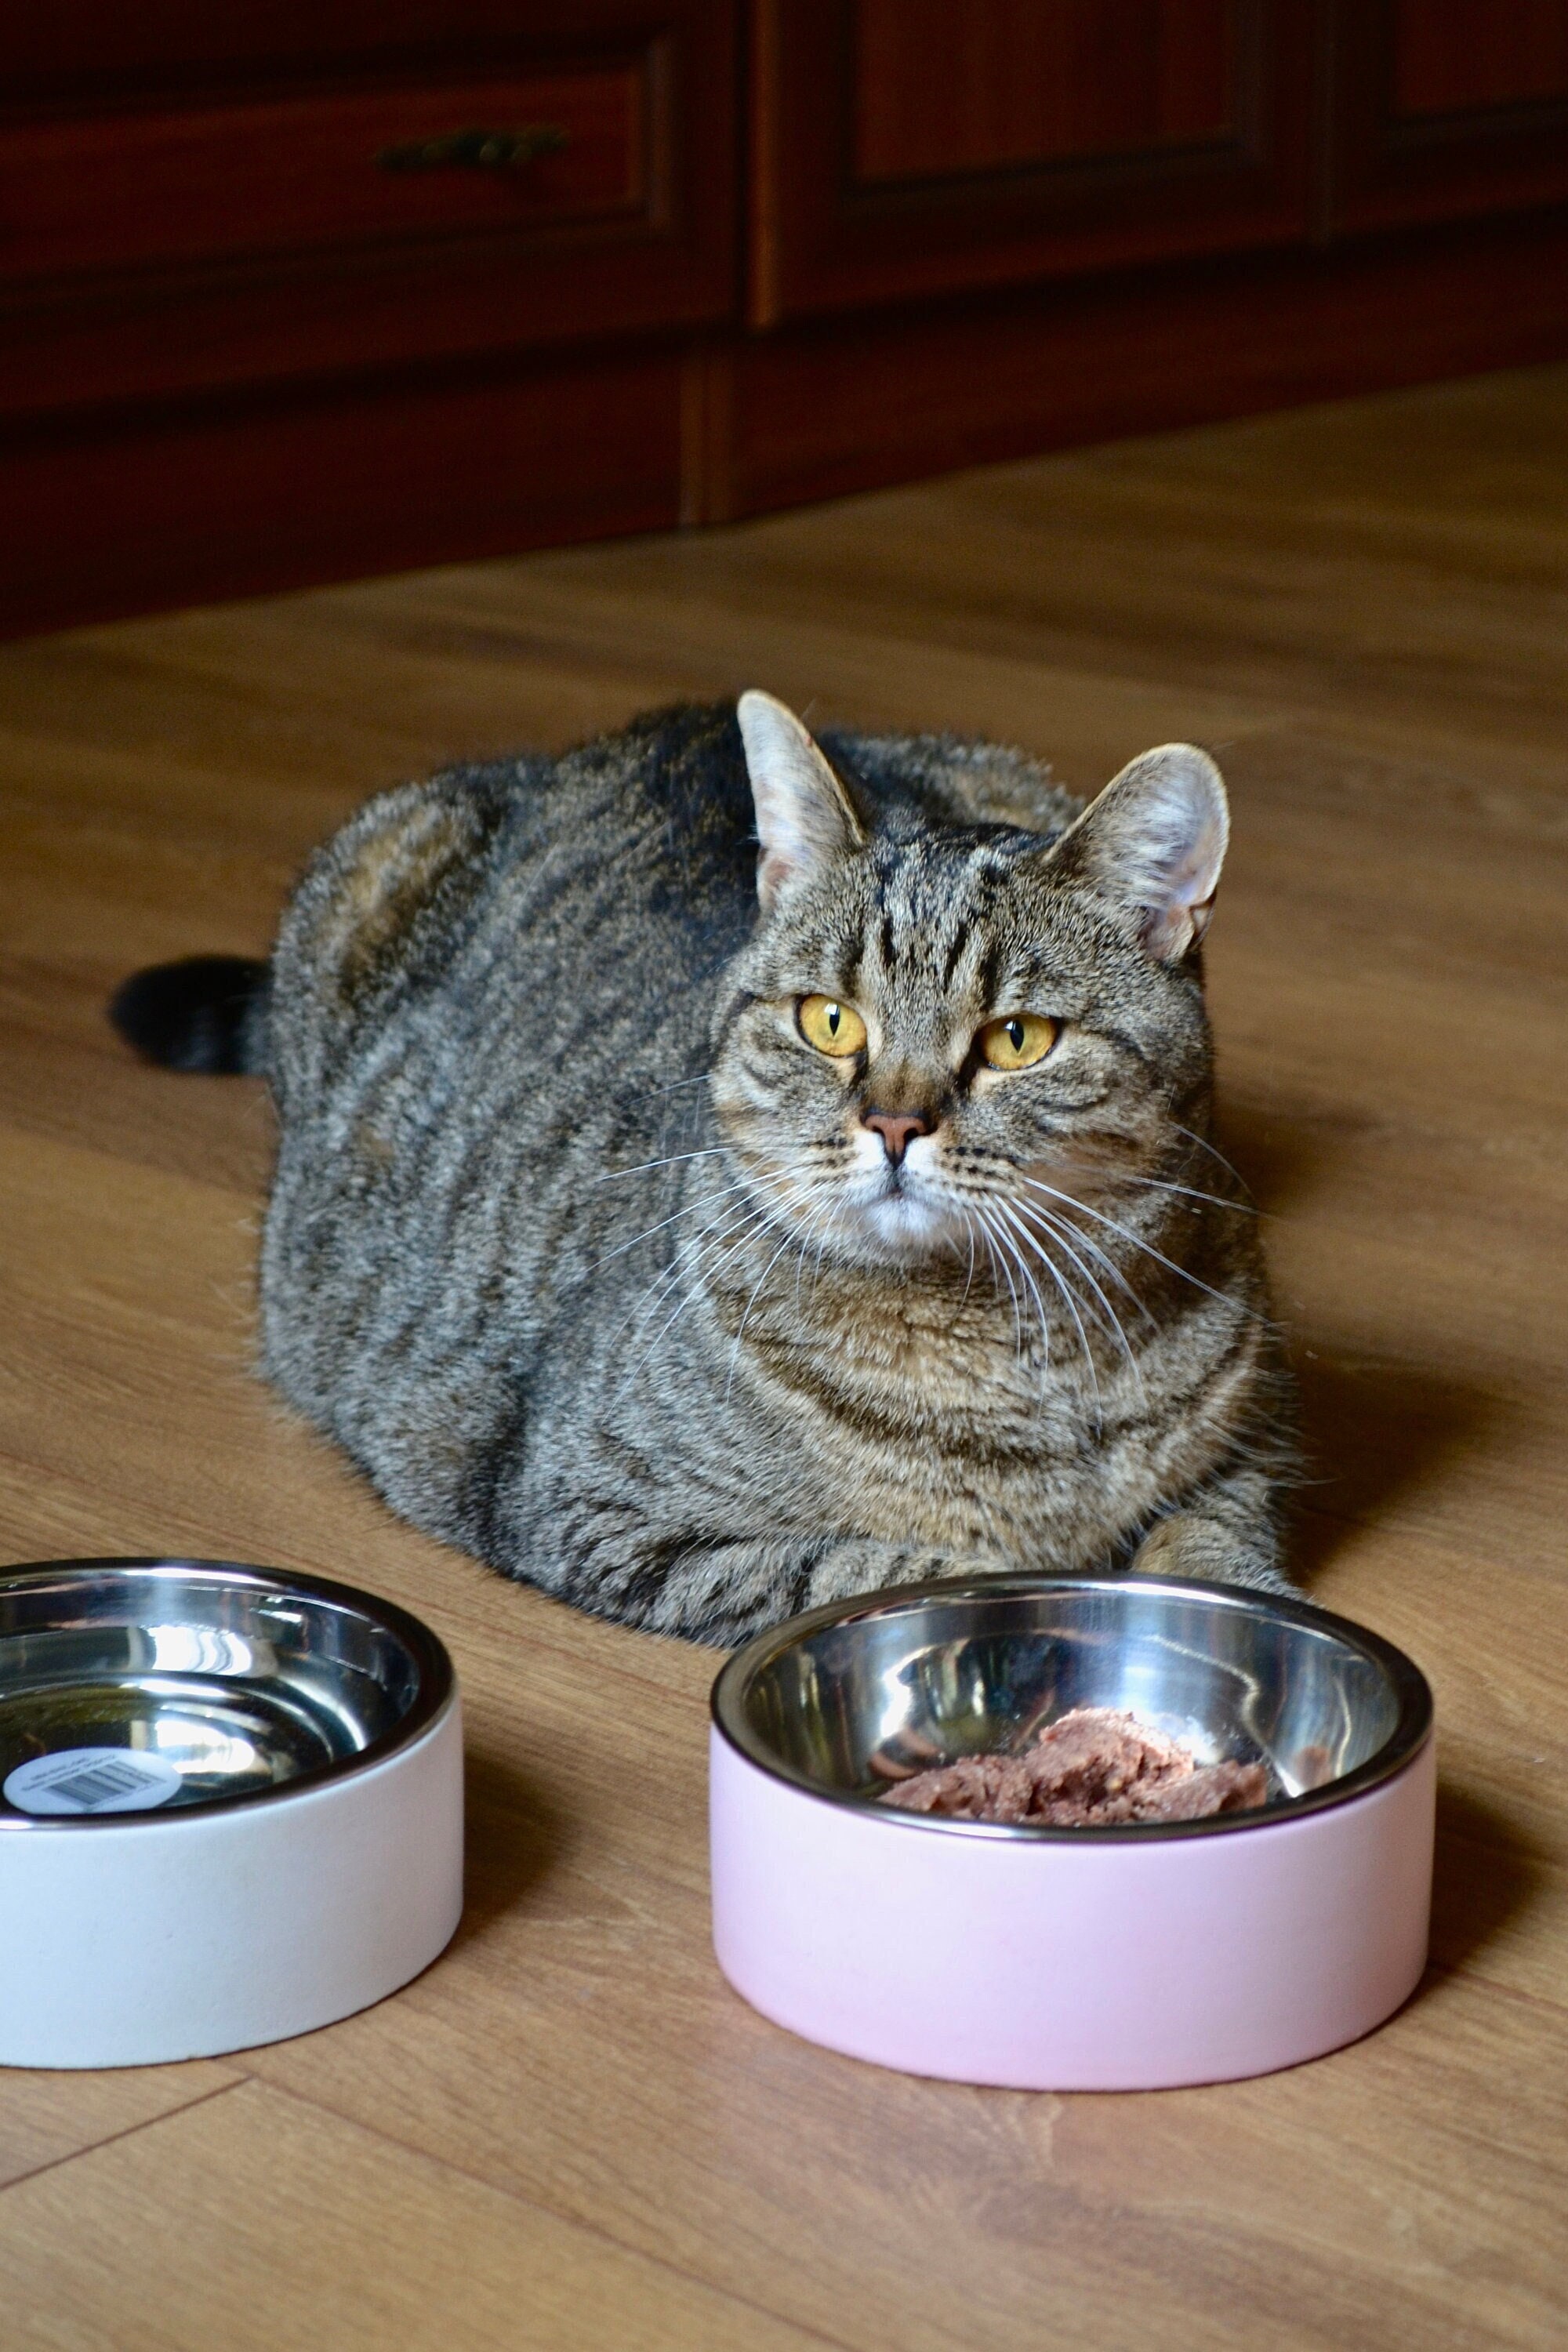 2) Stainless Steel Dog Cat Pet Bowl Large 52.4 oz Food or Water Bowl Dish